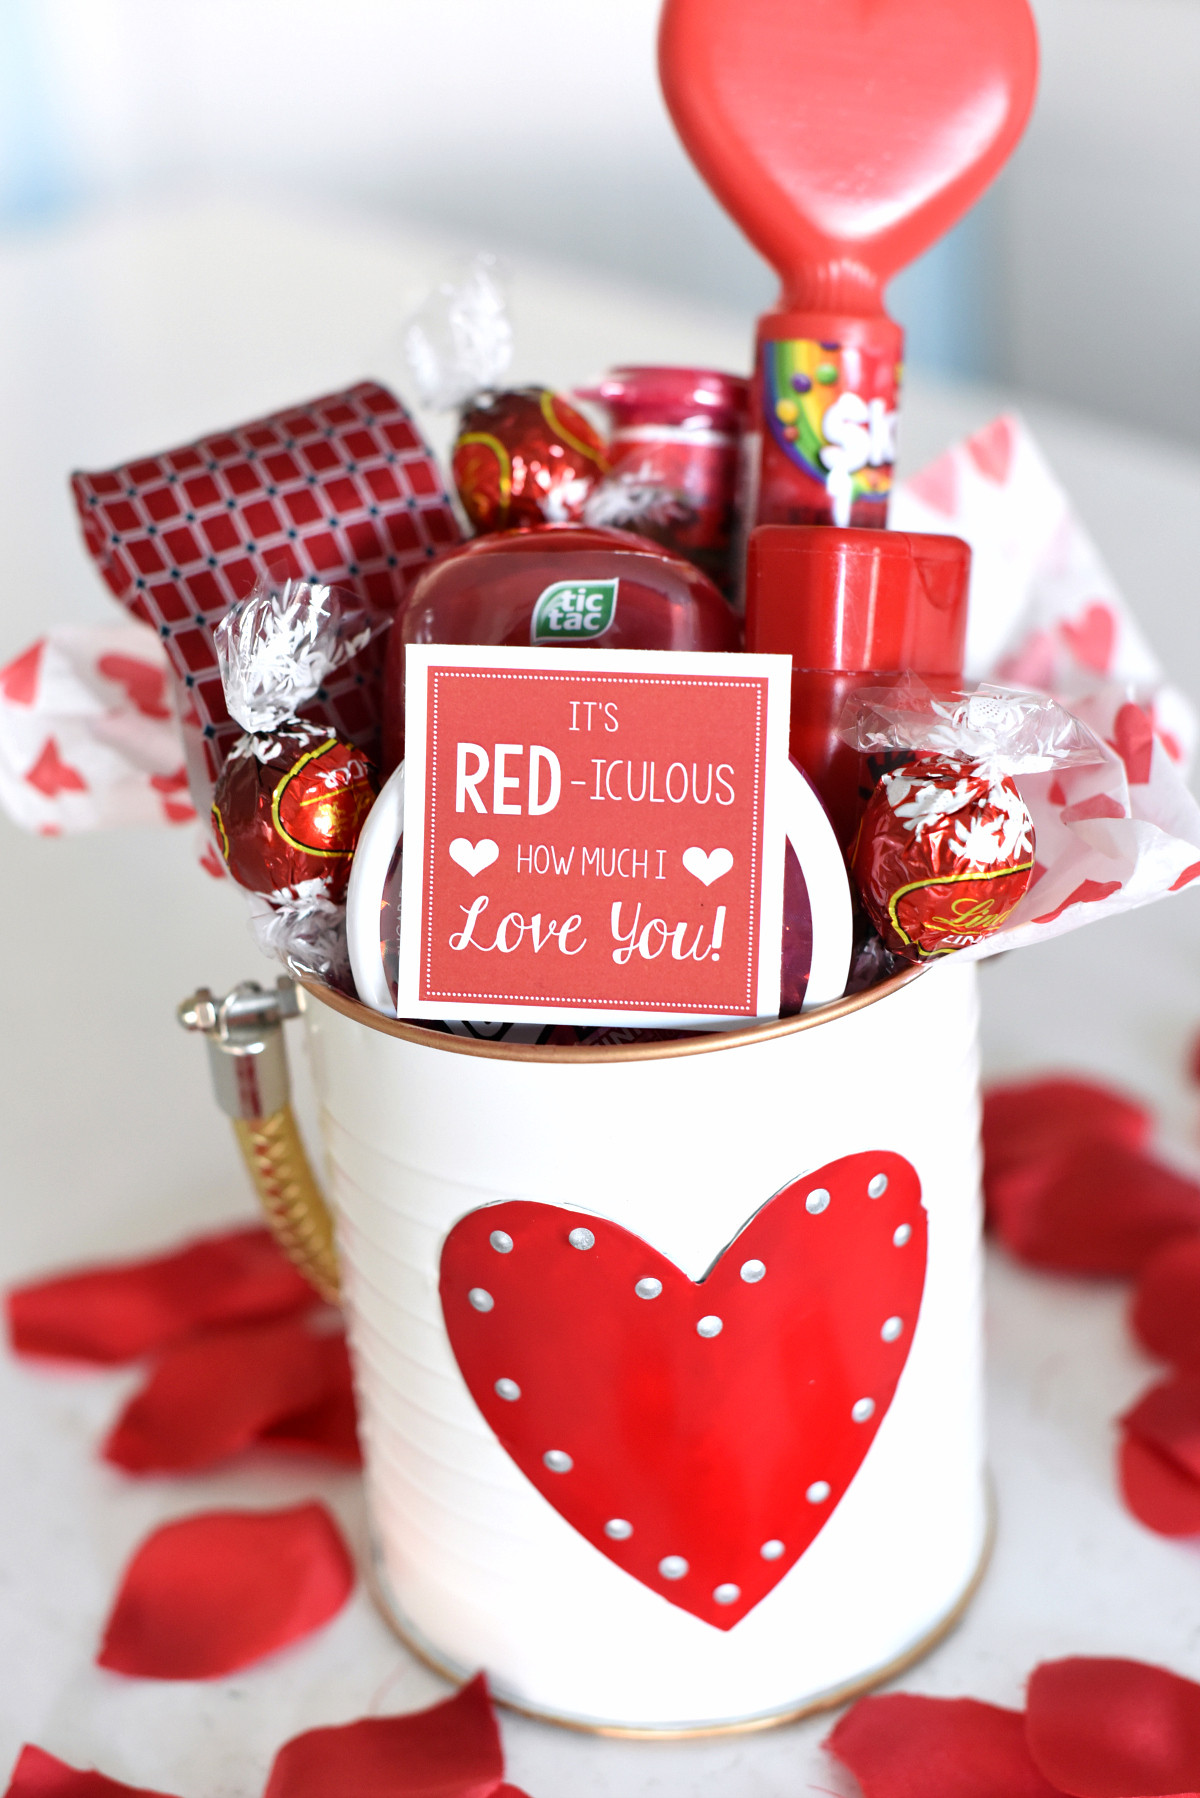 Personal Valentines Gift Ideas
 25 DIY Valentine s Day Gift Ideas Teens Will Love